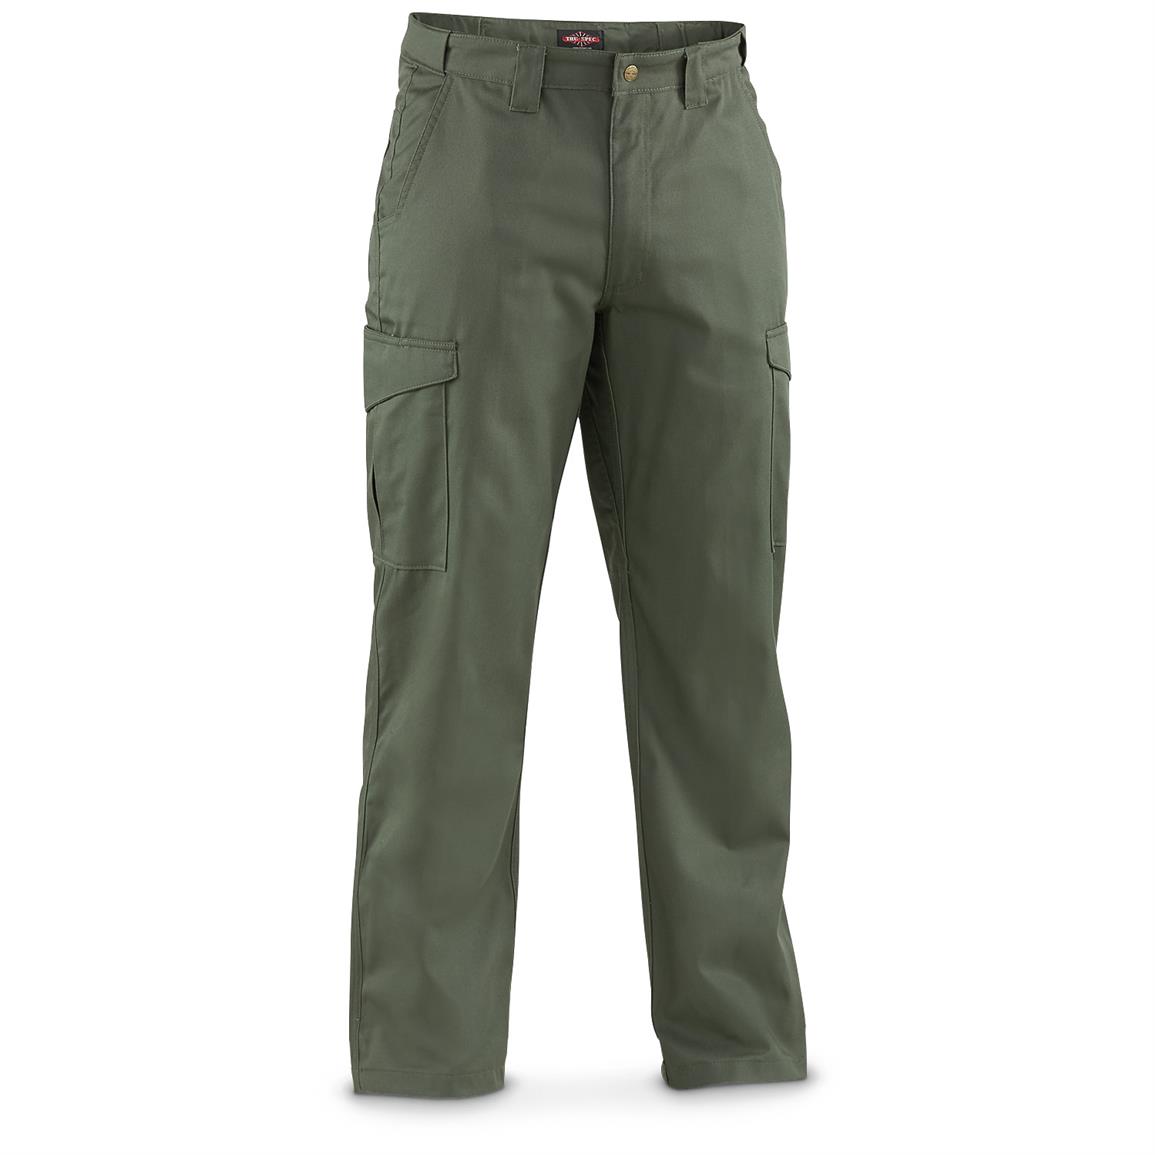 TRU-SPEC 24-7 Range Pants - 660228, Tactical Clothing at Sportsman's Guide